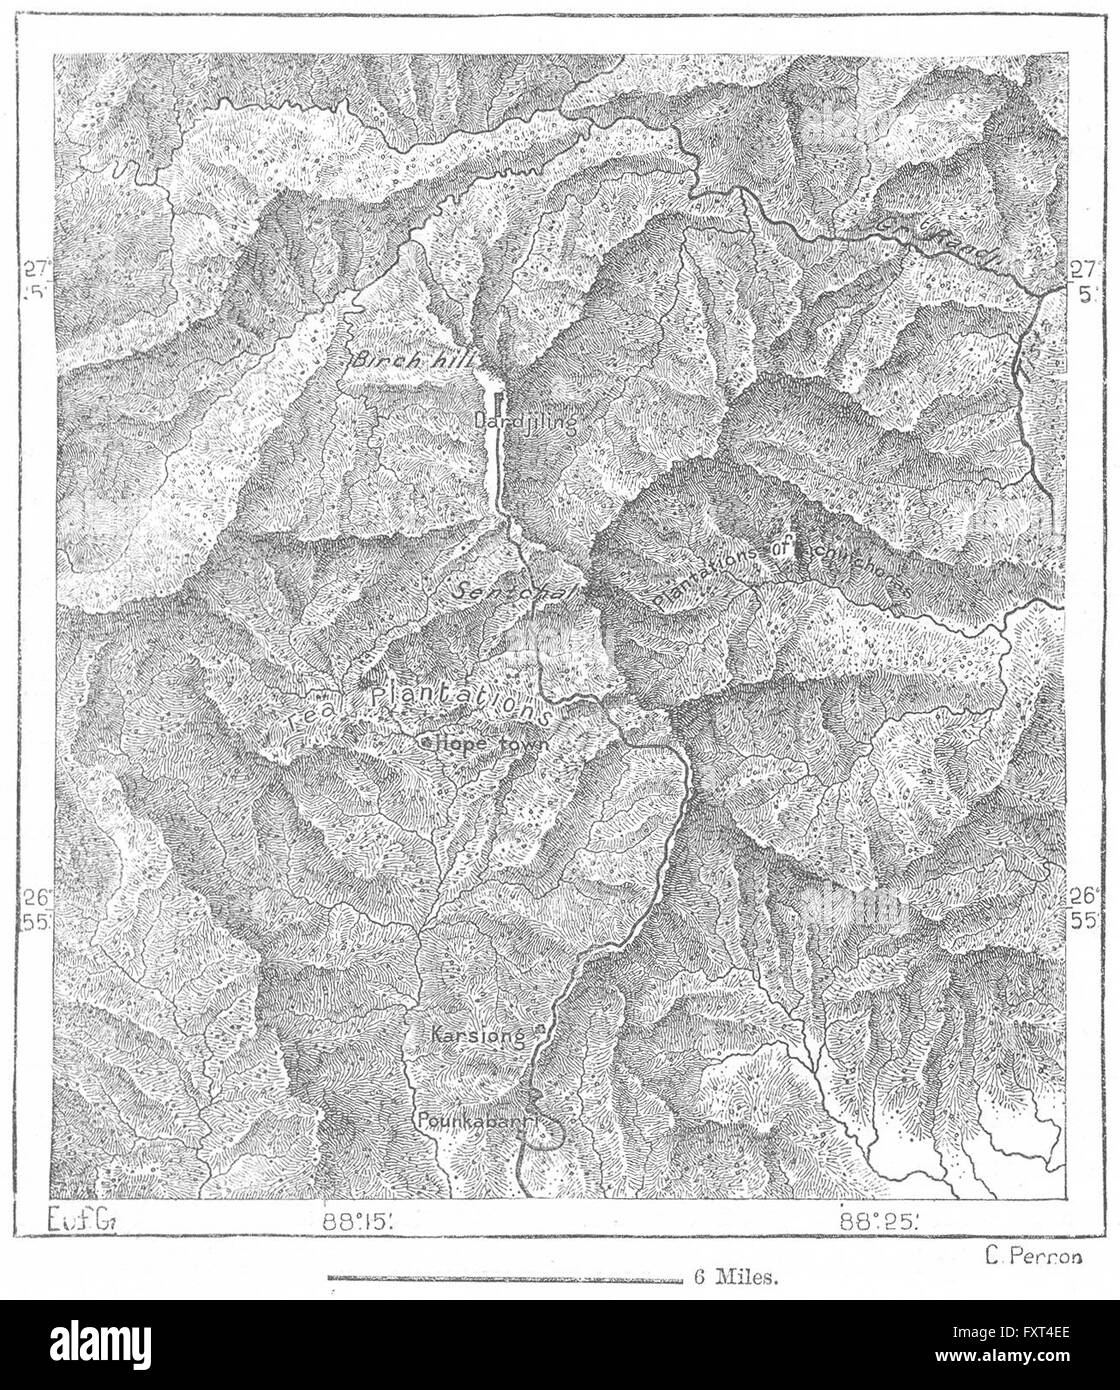 INDIA: Darjeeling, sketch map, c1885 Stock Photo